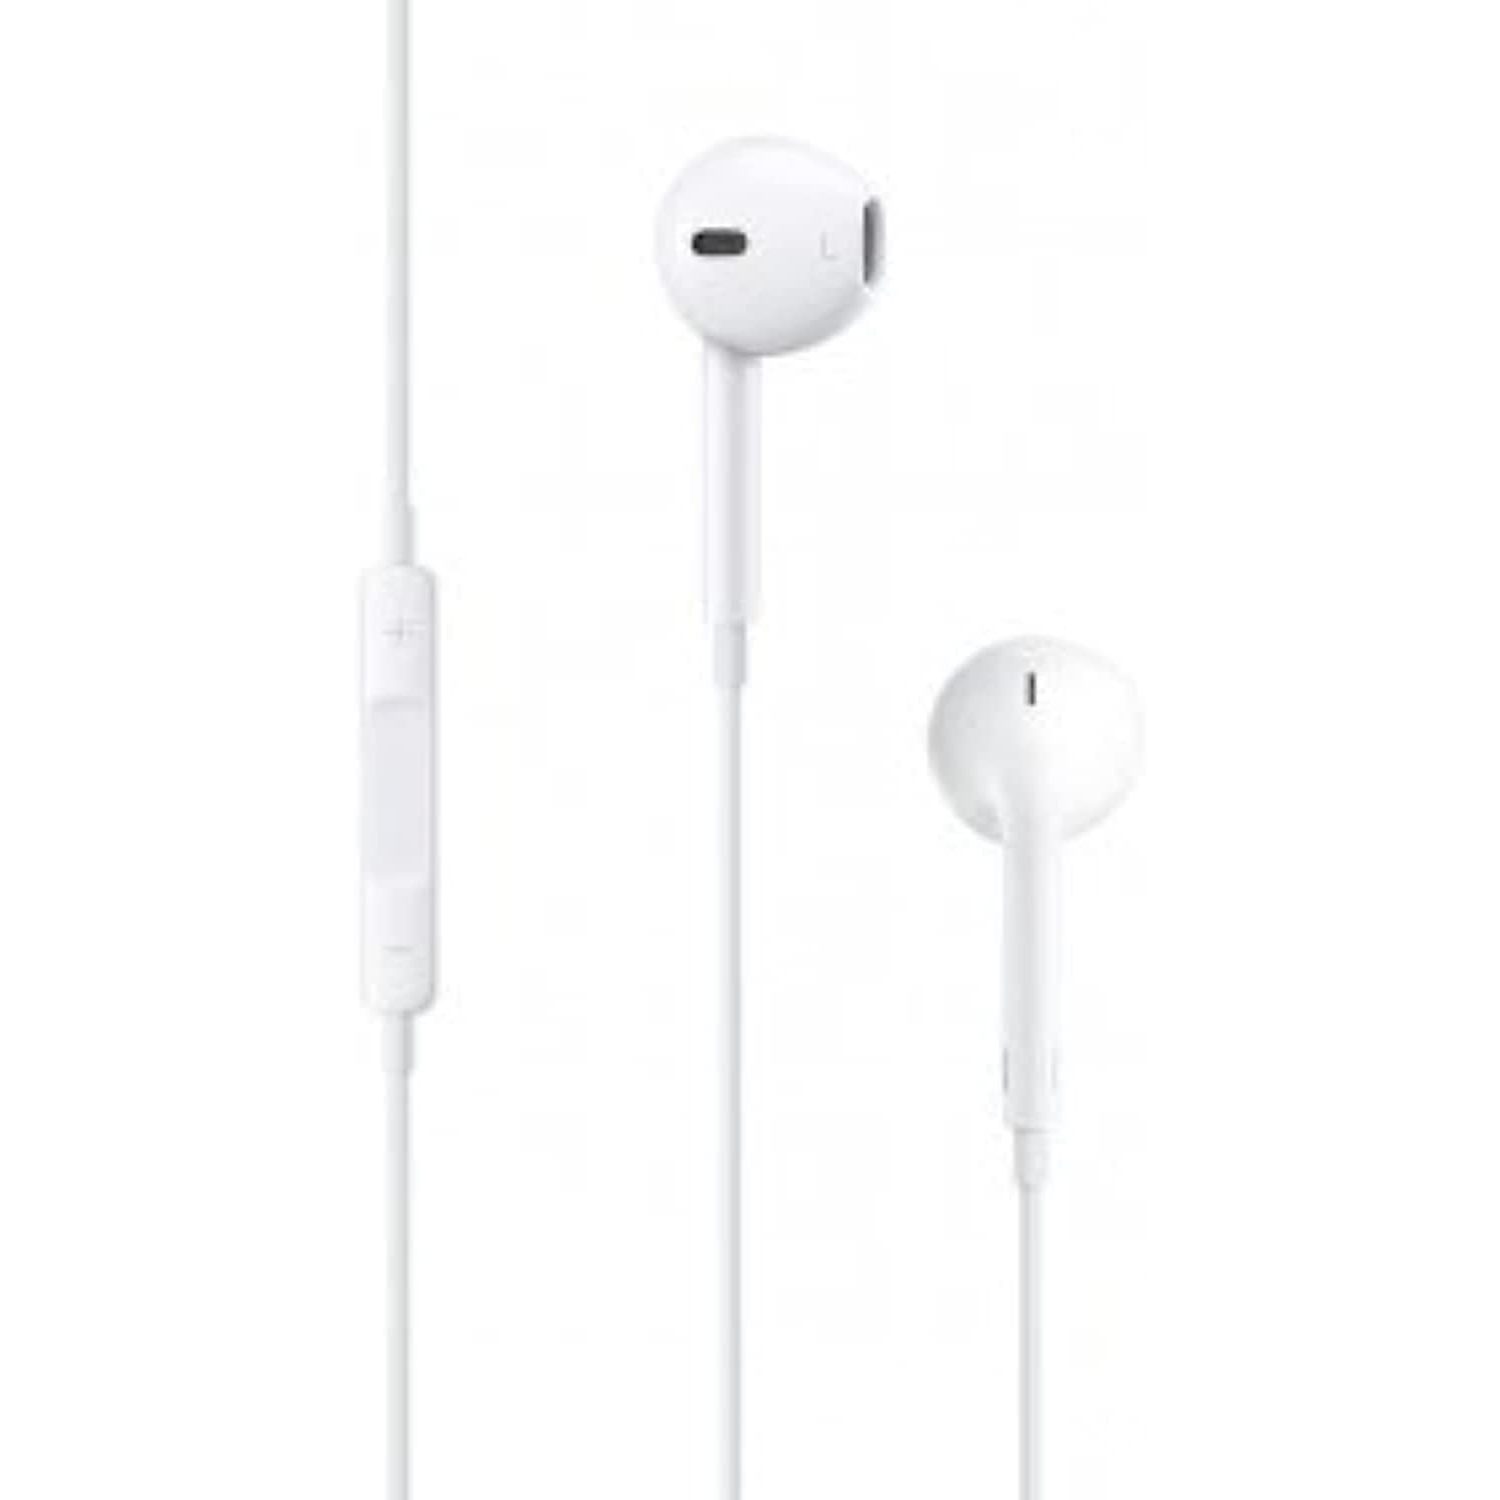 ایرپاد اپل با دوشاخه هدفون 3.5 میلی متری Apple EarPods with 3.5mm Headphone Plug